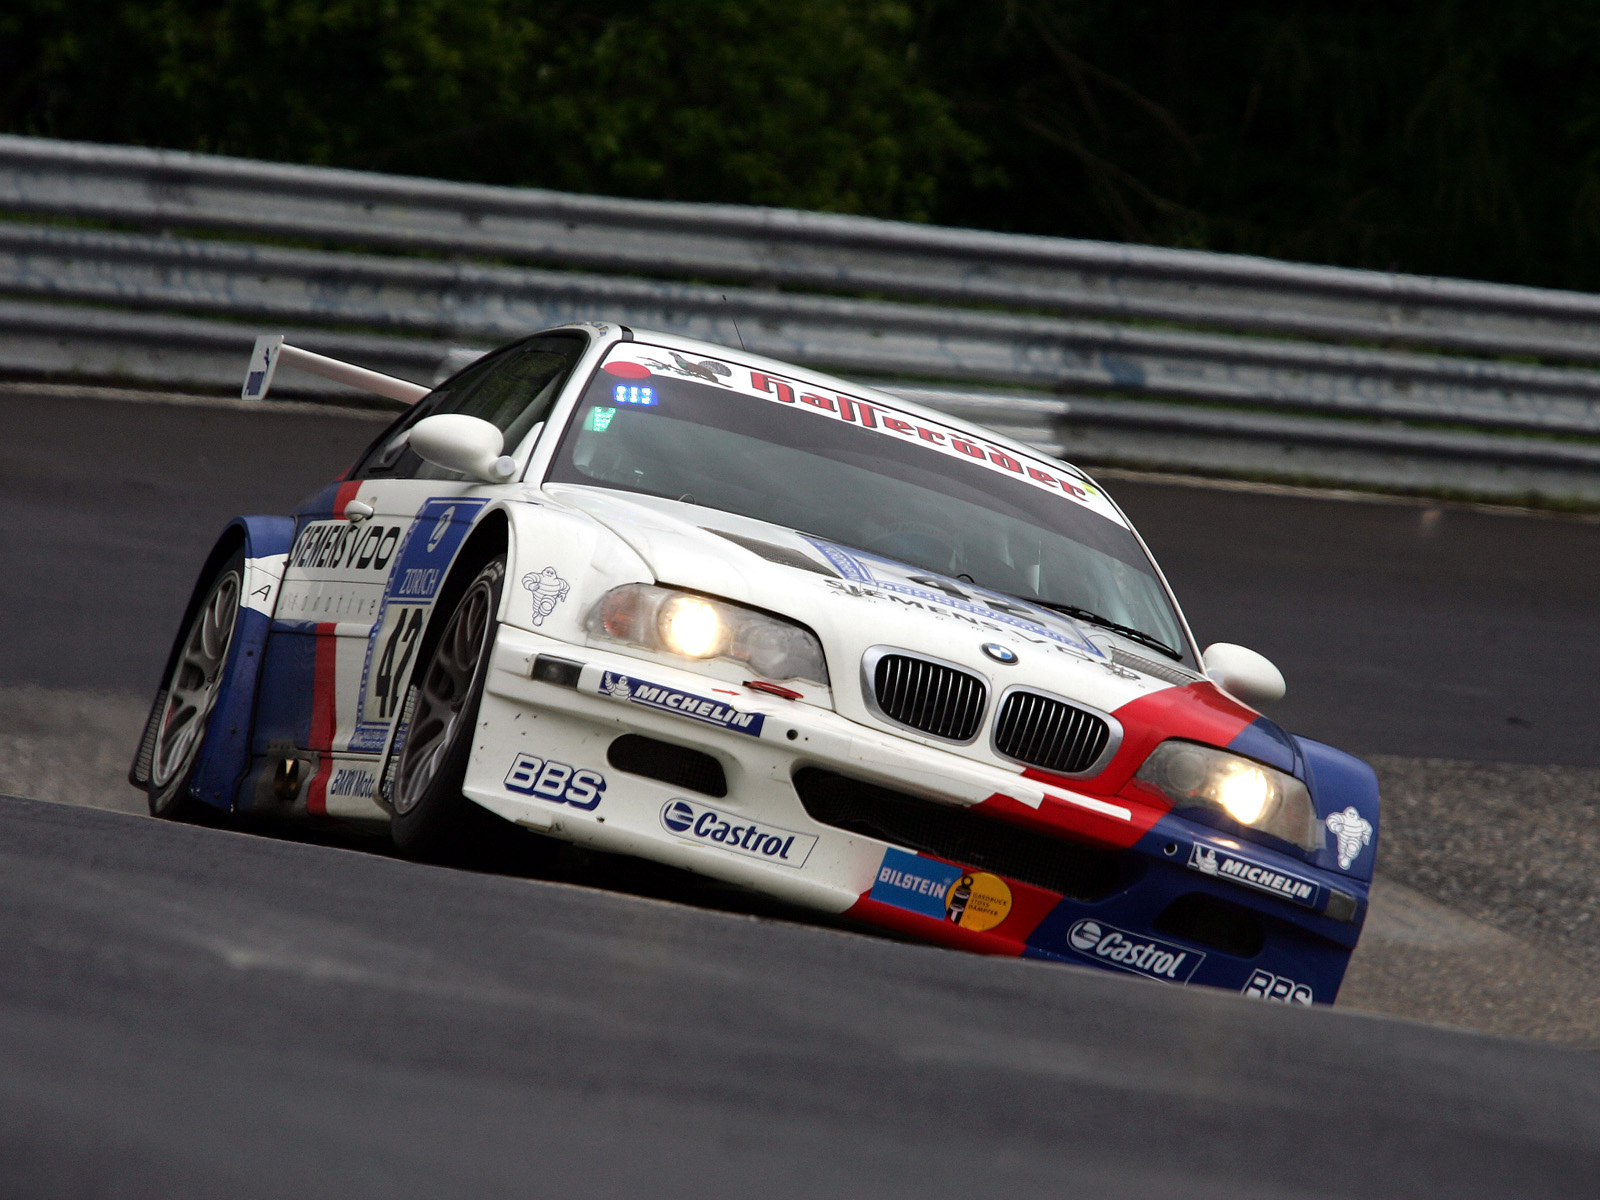 2001, Bmw, M3, Gtr, E46, Race, Racing, M 3 Wallpaper